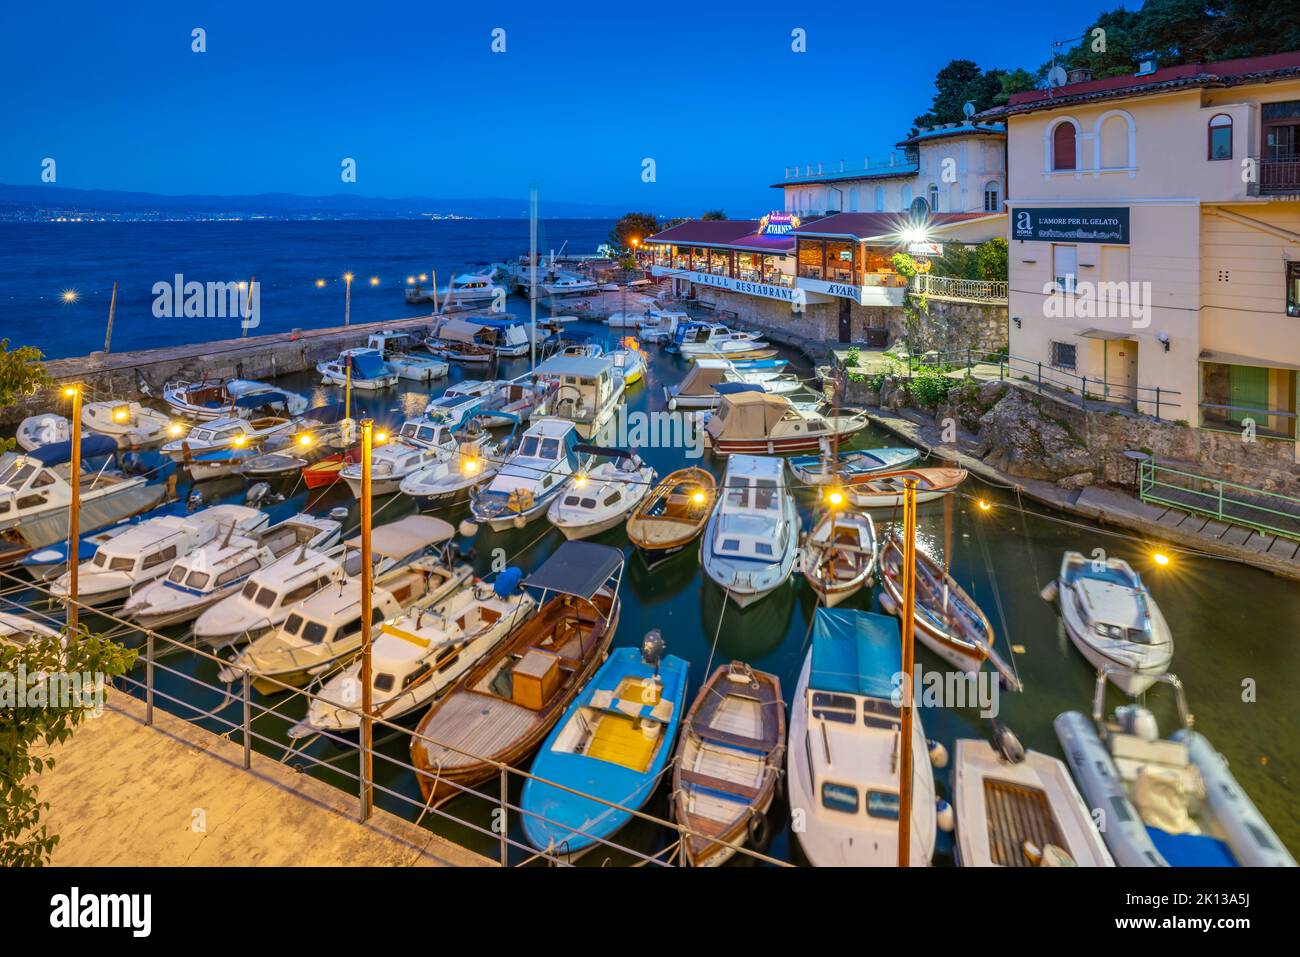 View of cafe and restaurant overlooking harbour at dusk, Lovran village, Lovran, Kvarner Bay, Eastern Istria, Croatia, Europe Stock Photo